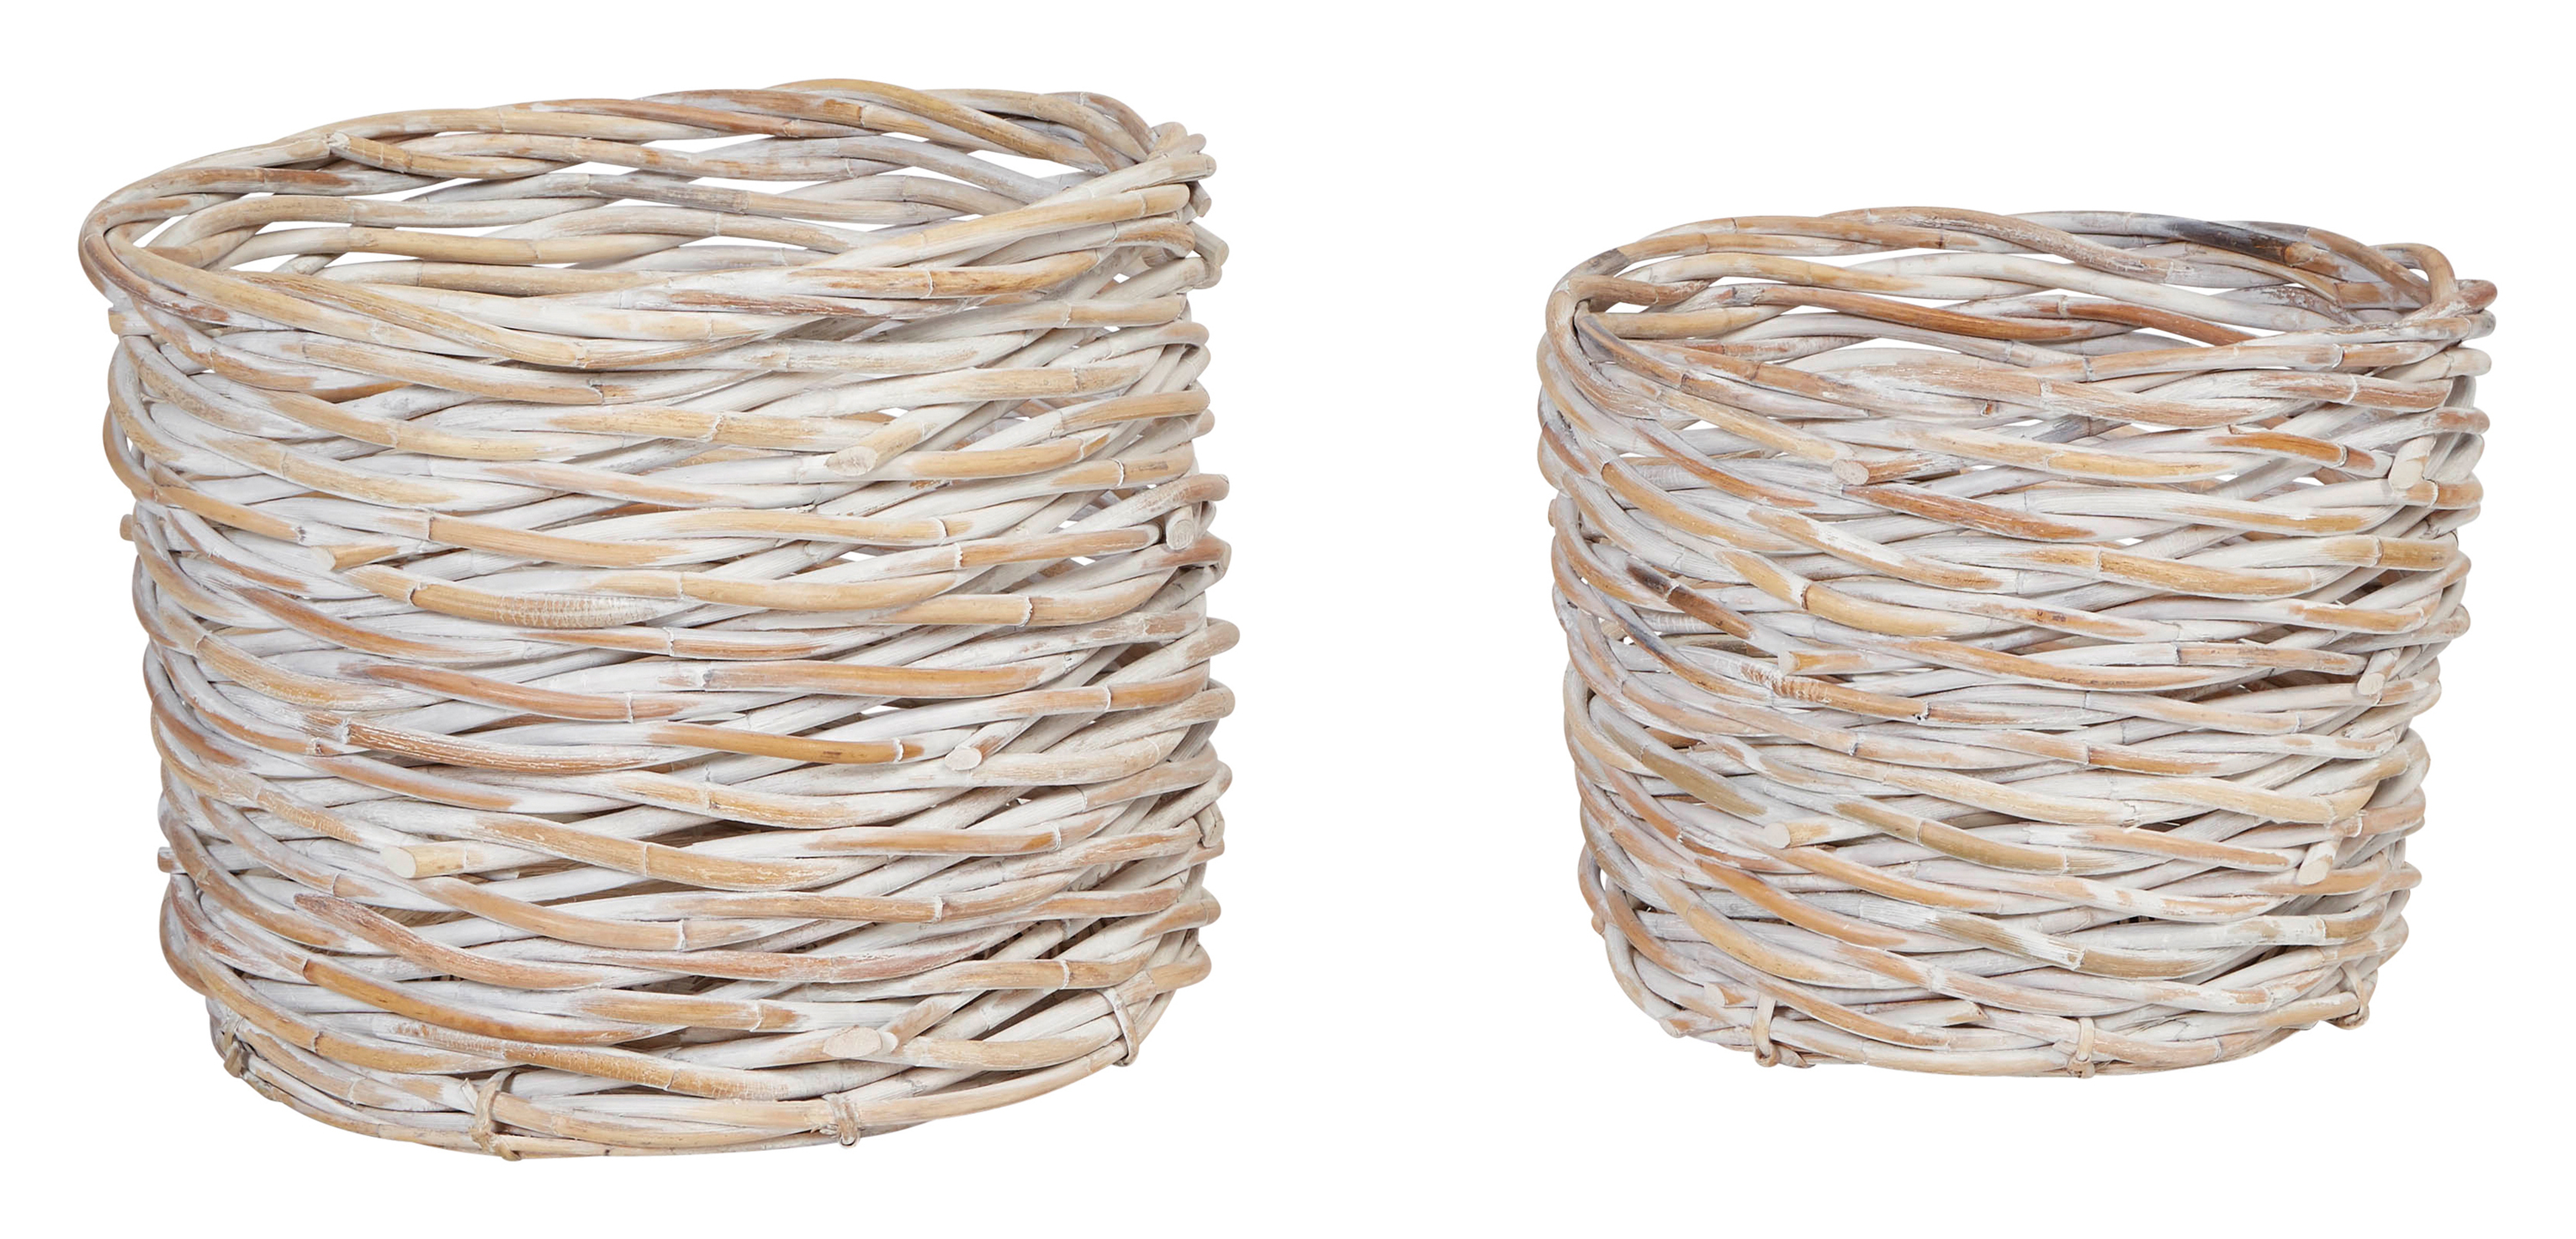 Handwoven Arurog Baskets with Whitewashed Finish (Set of 2 Sizes) - Nomad Home